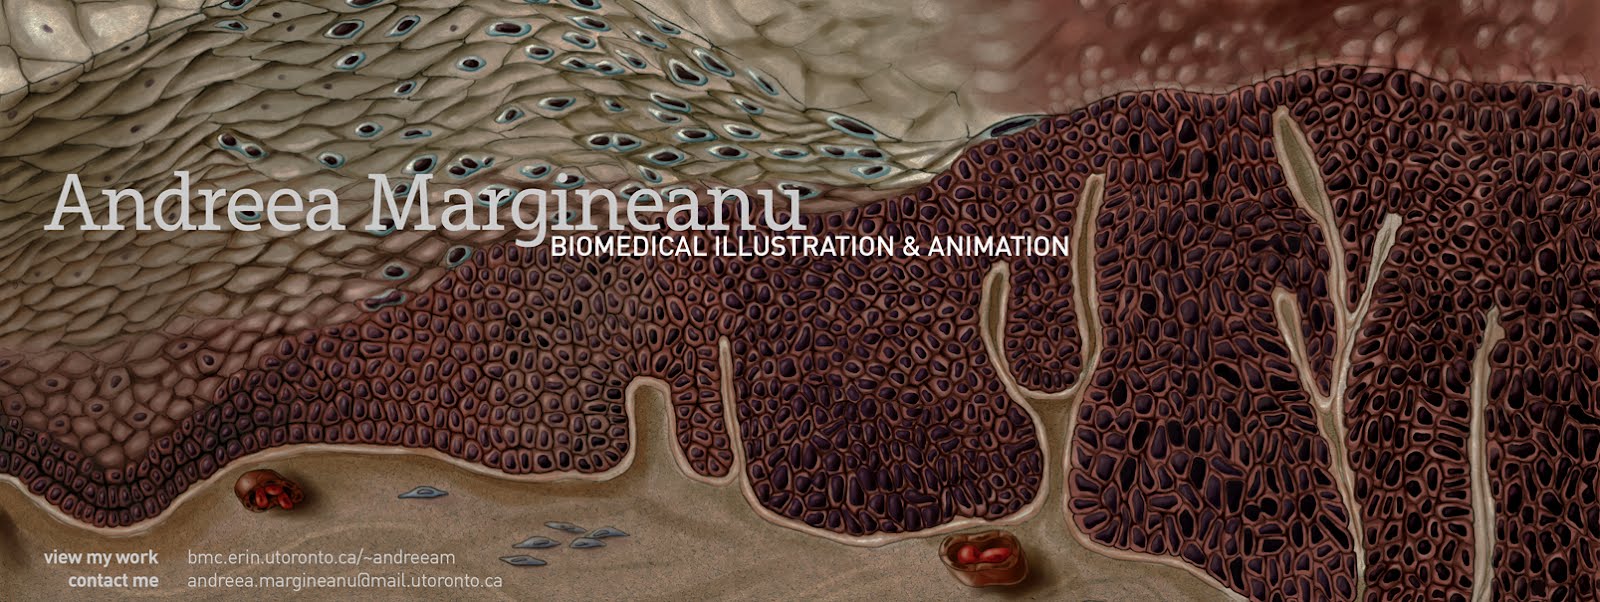 andreea margineanu: biomedical illustration and animation